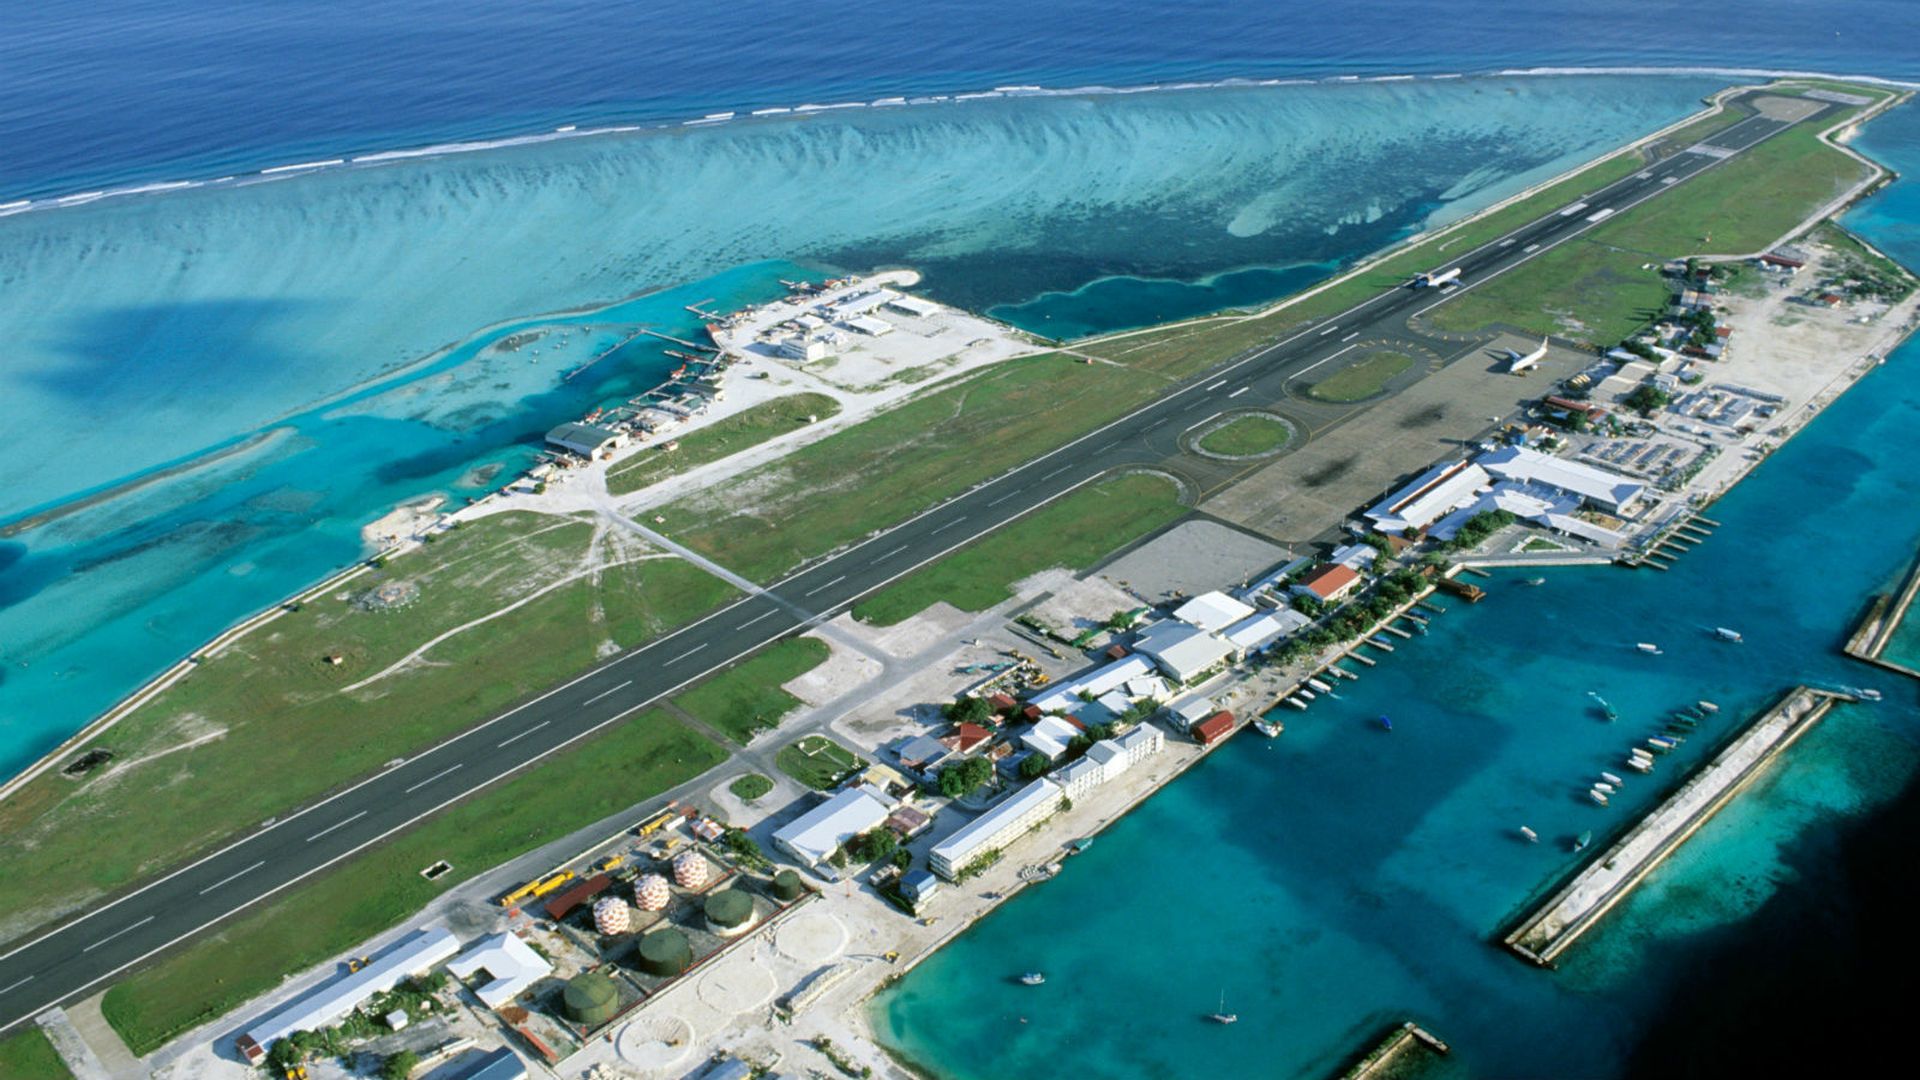 Аэропорт мале вылет. Международный аэропорт Мале Мальдивы. Международный аэропорт Велана. Международный аэропорт Мале остров Хулуле Мальдивы. Аэропорт Ибрагима Насира Мале.